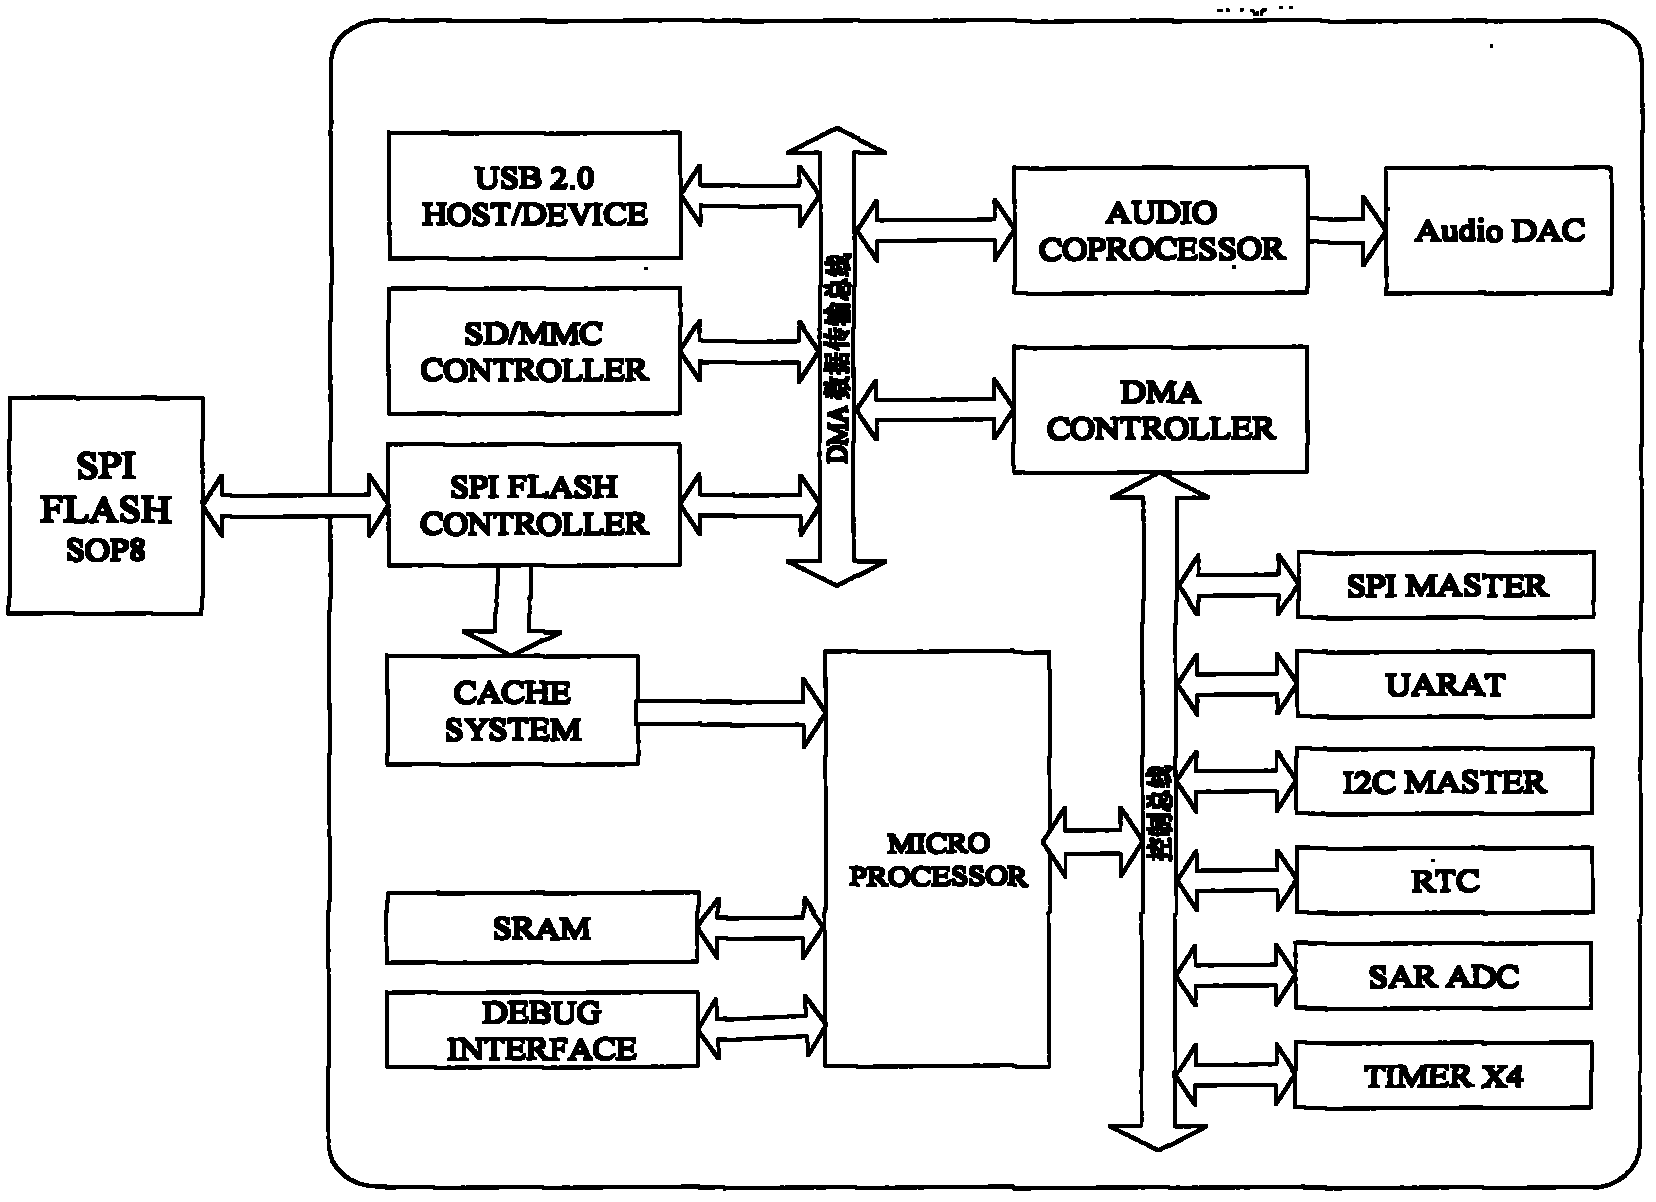 Method for designing voice microprocessor